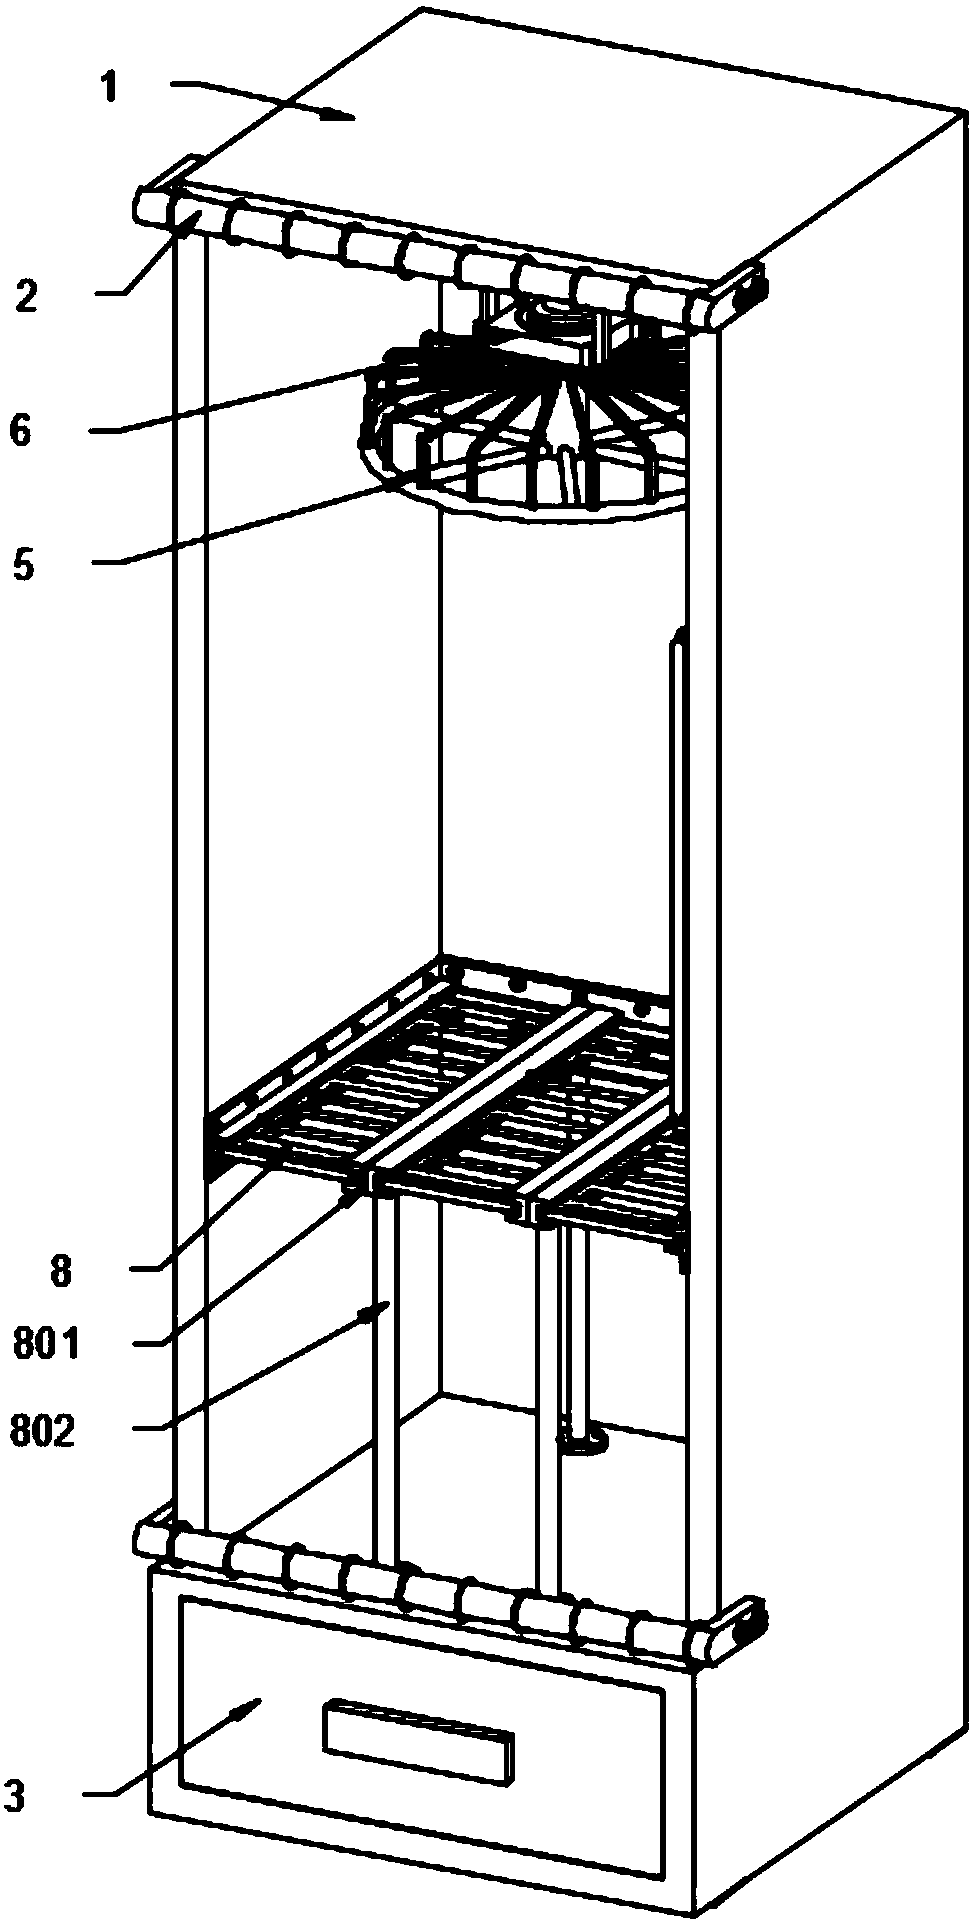 Rotatable cloakroom structure for indoor bedroom